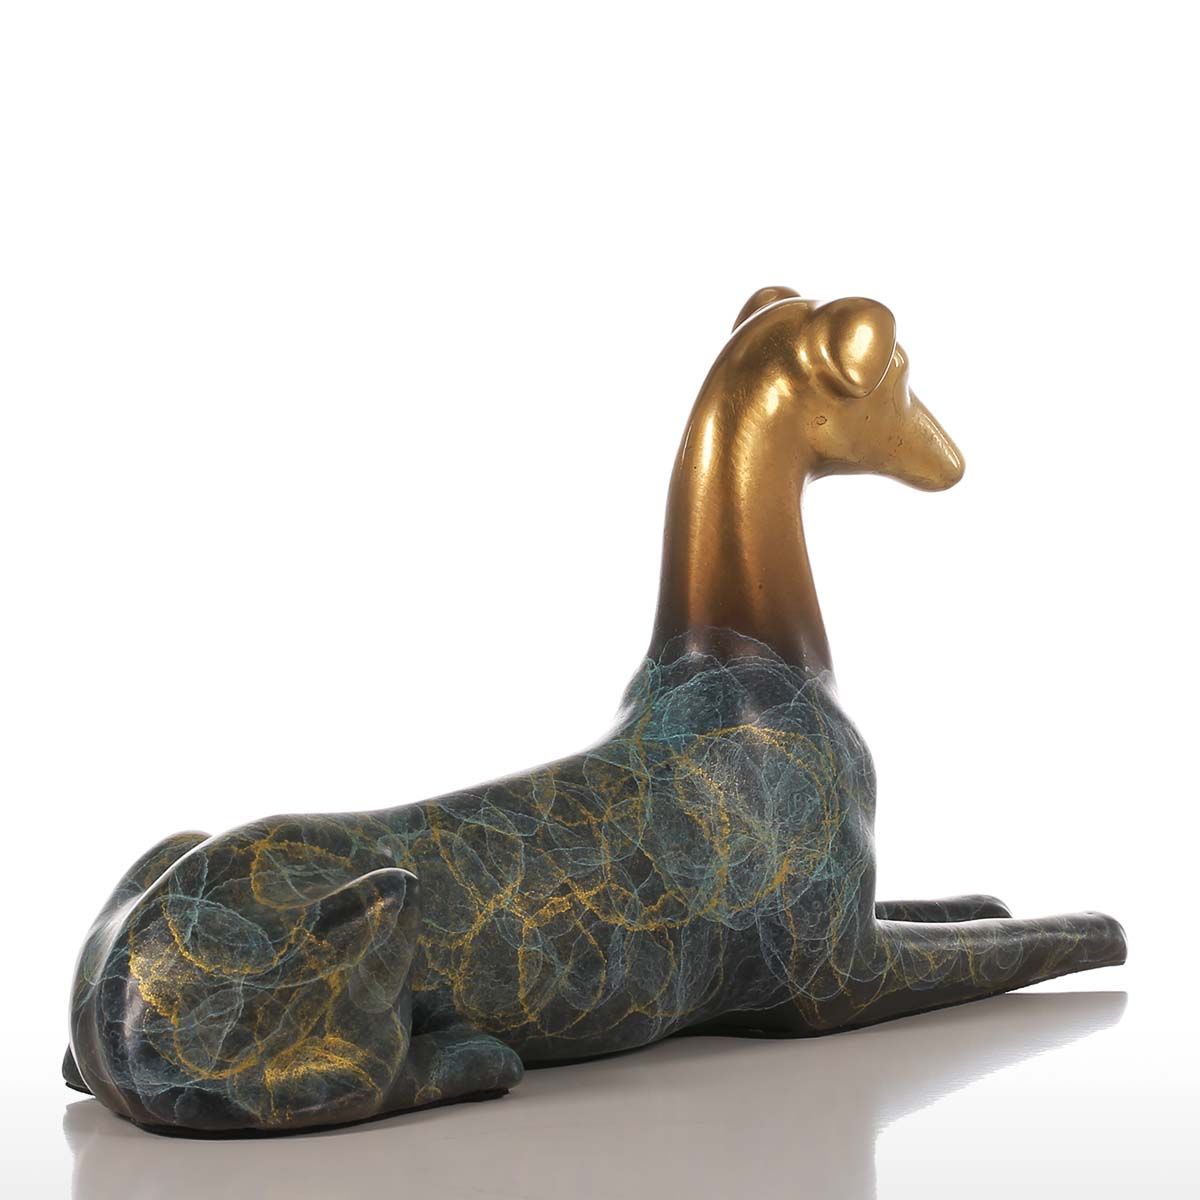 Hound Dog Handmade Bronze Sculpture - Sweet Home Make